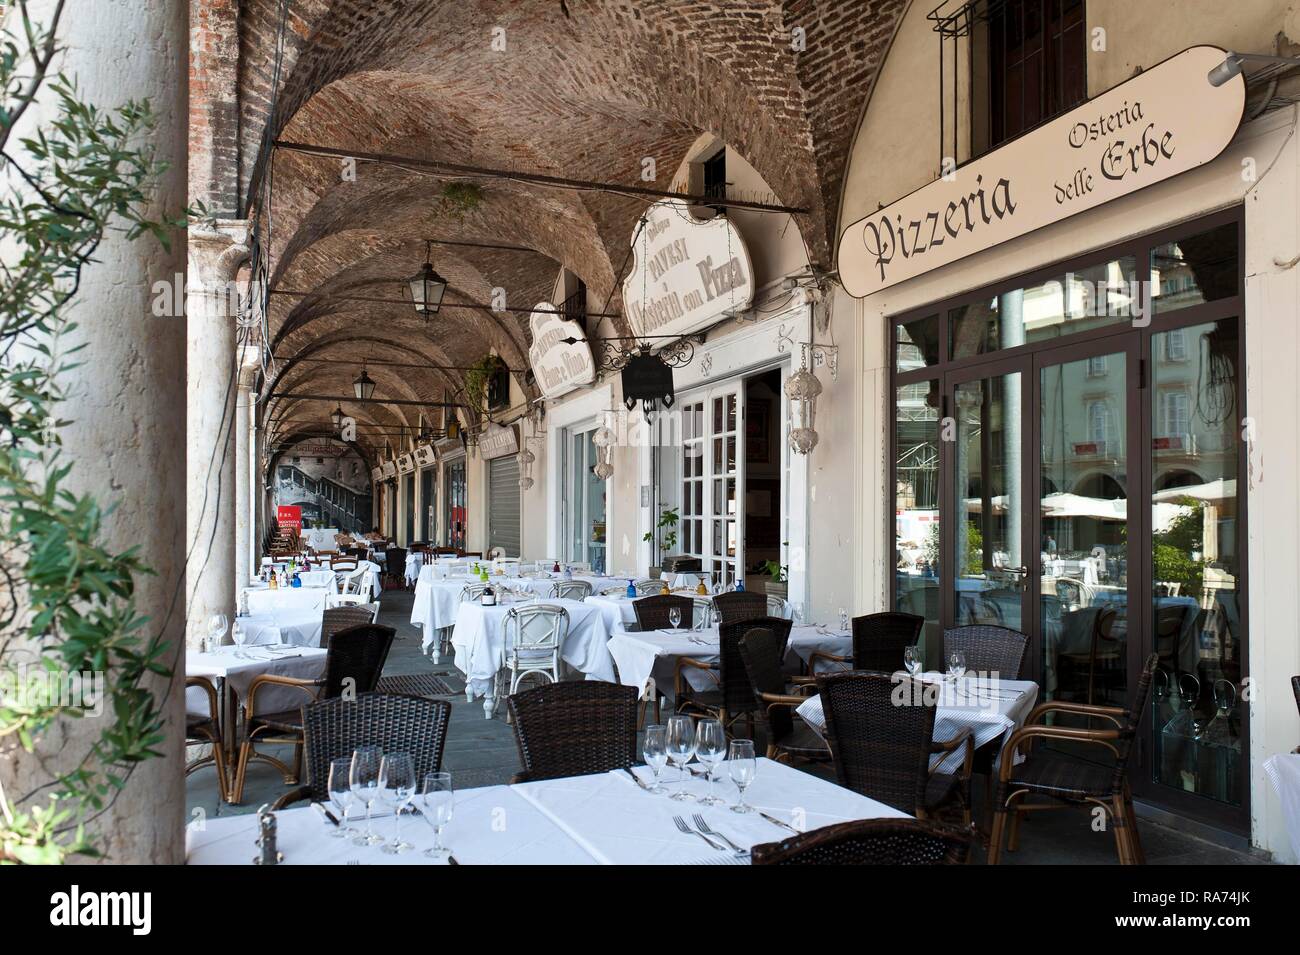 Italian gastronomy, restaurant under arcades, pizzeria Osteria delle Erbe, Mantua, Lombardy, Italy Stock Photo